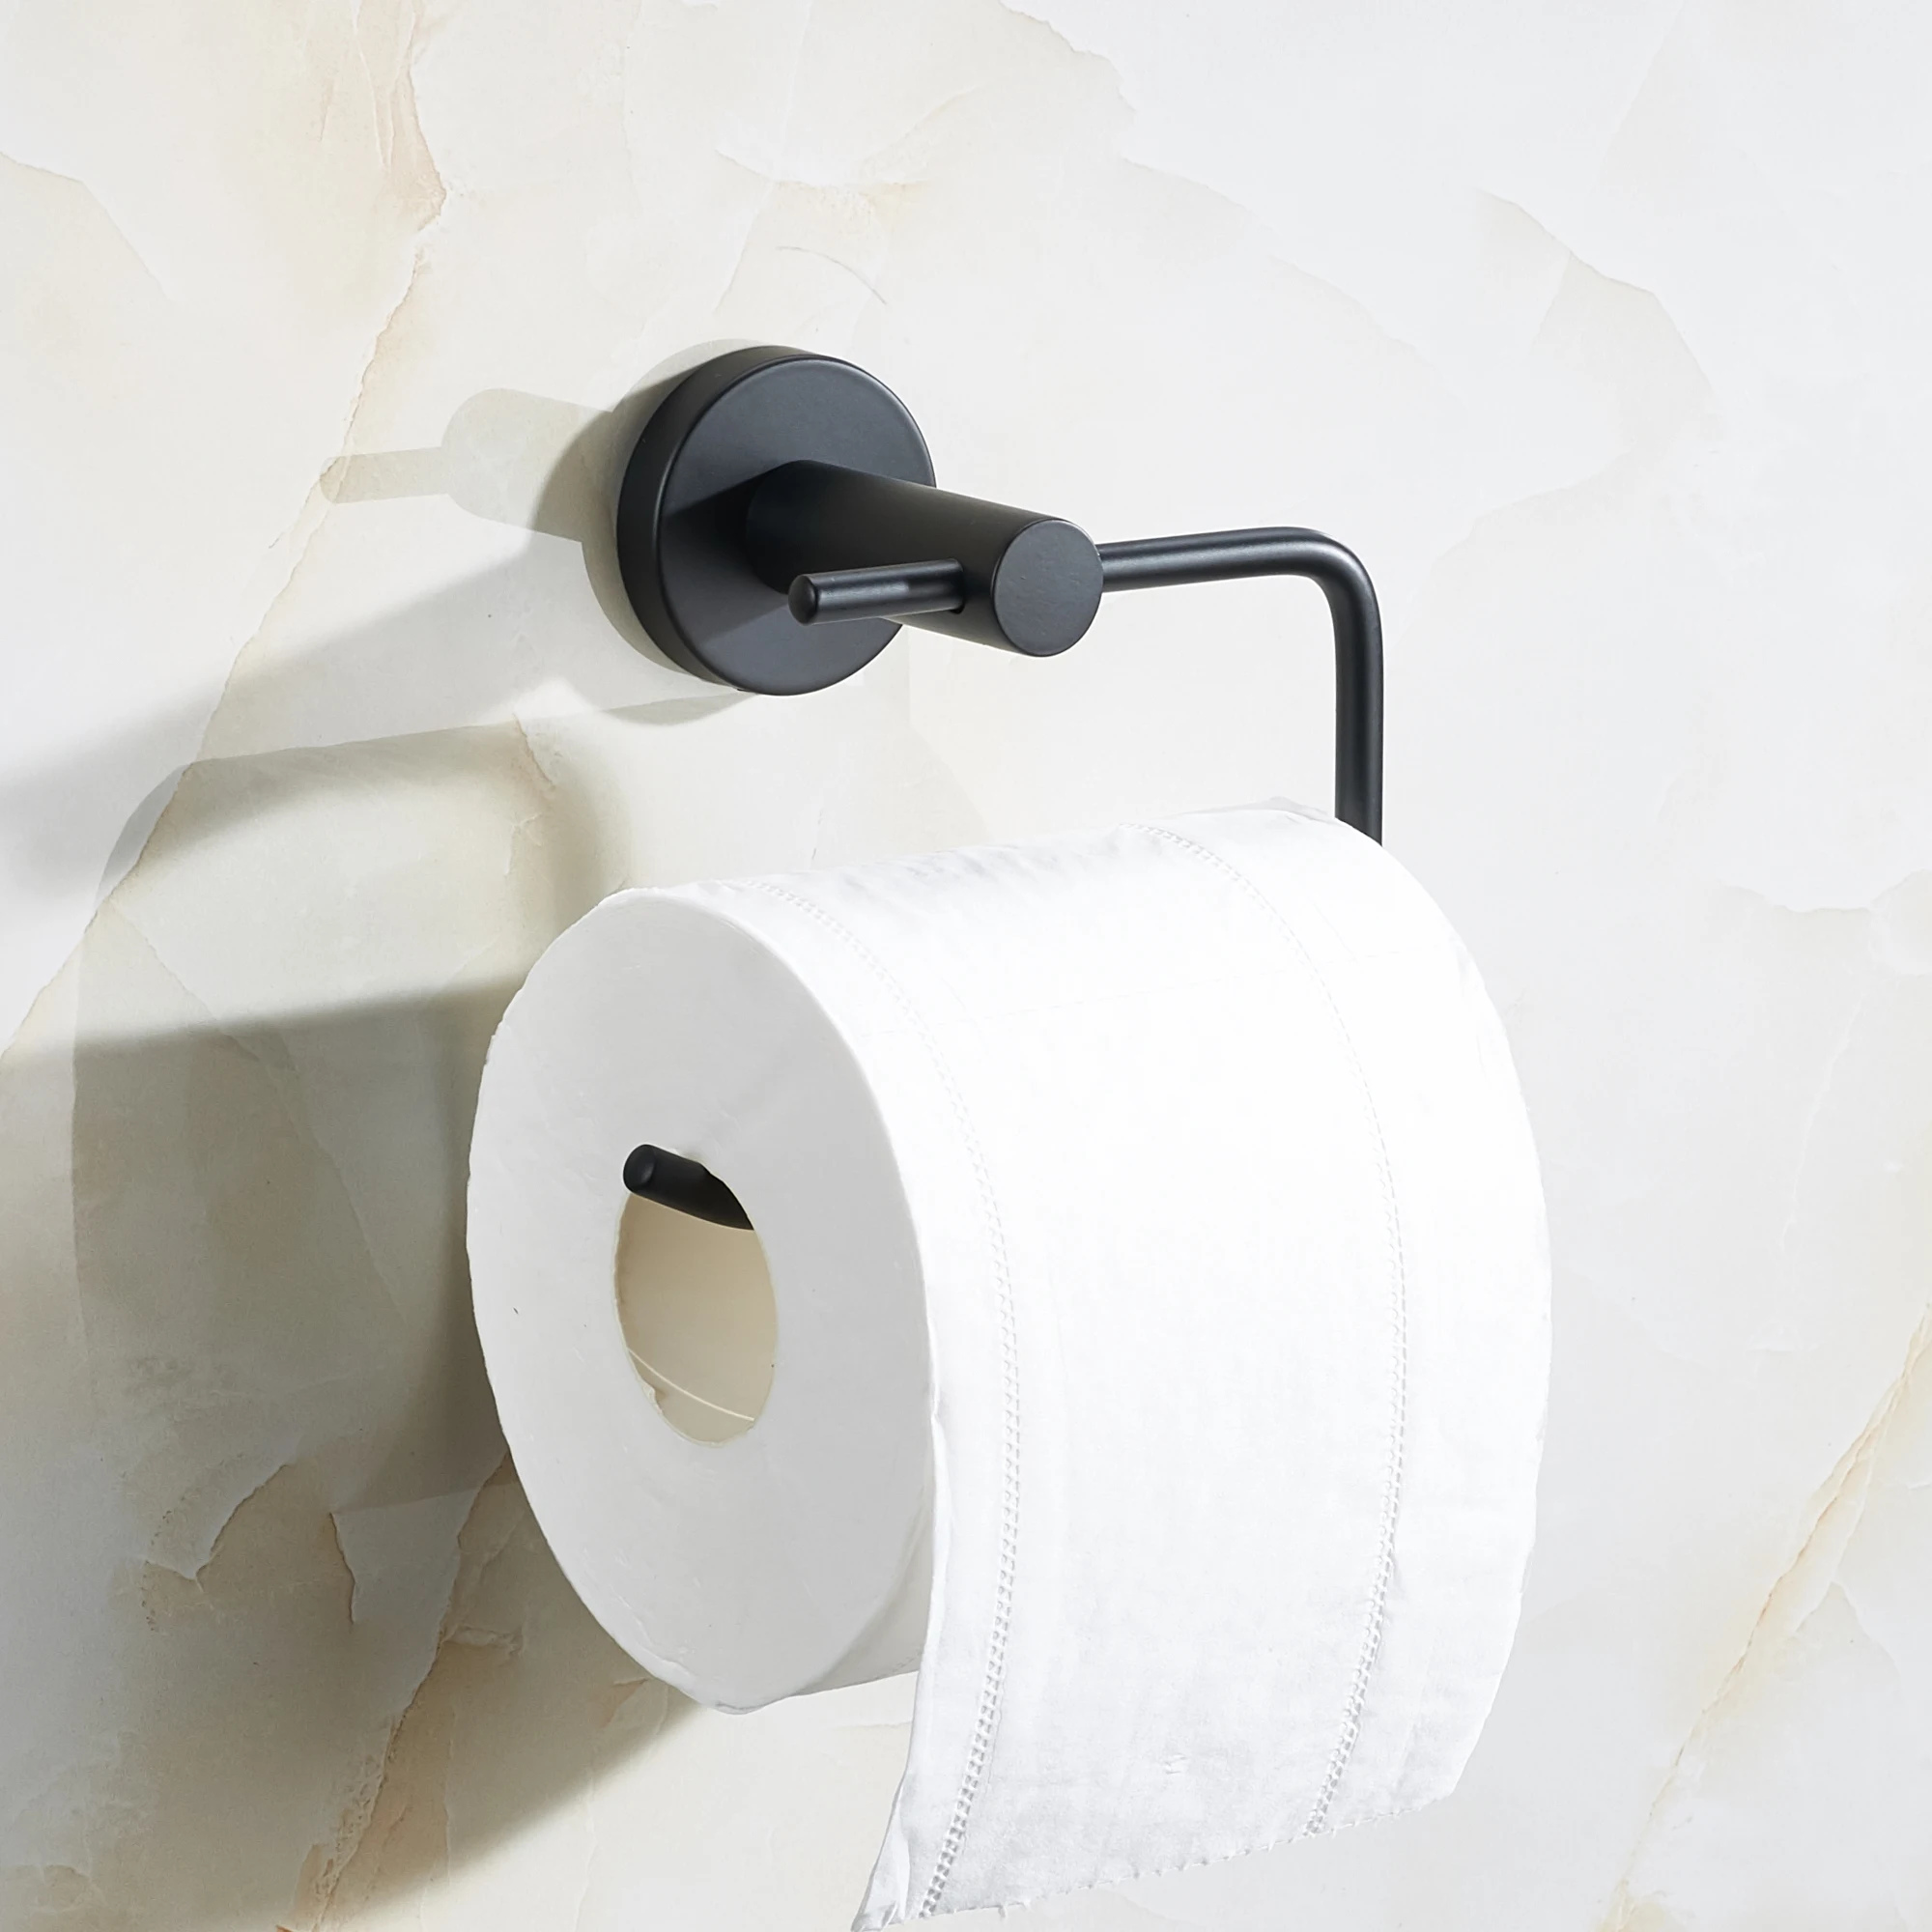 SARIHOSY-soporte para papel higiénico, montaje en pared de acero inoxidable 304, negro mate, accesorios de baño para dispensador de toallas de papel